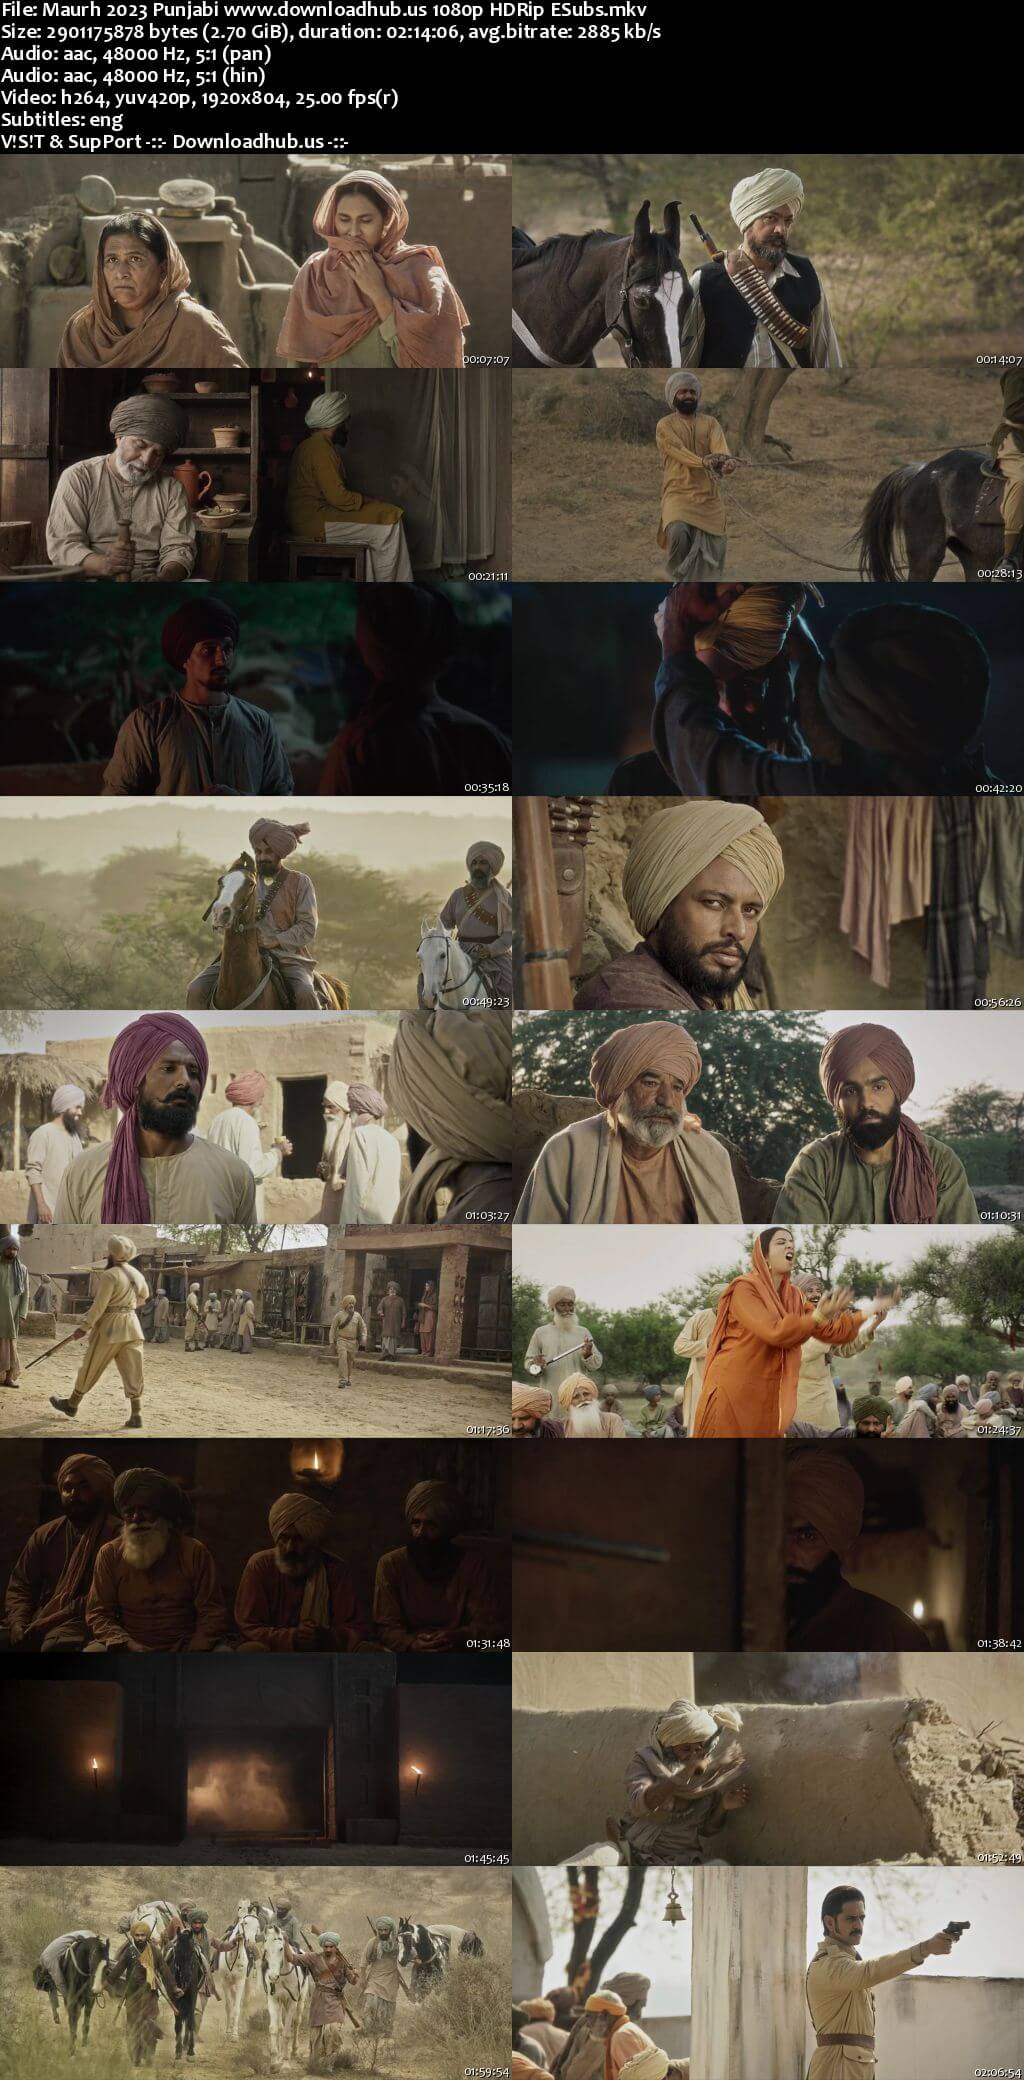 Maurh 2023 Punjabi Movie 1080p 720p 480p HDRip ESubs HEVC